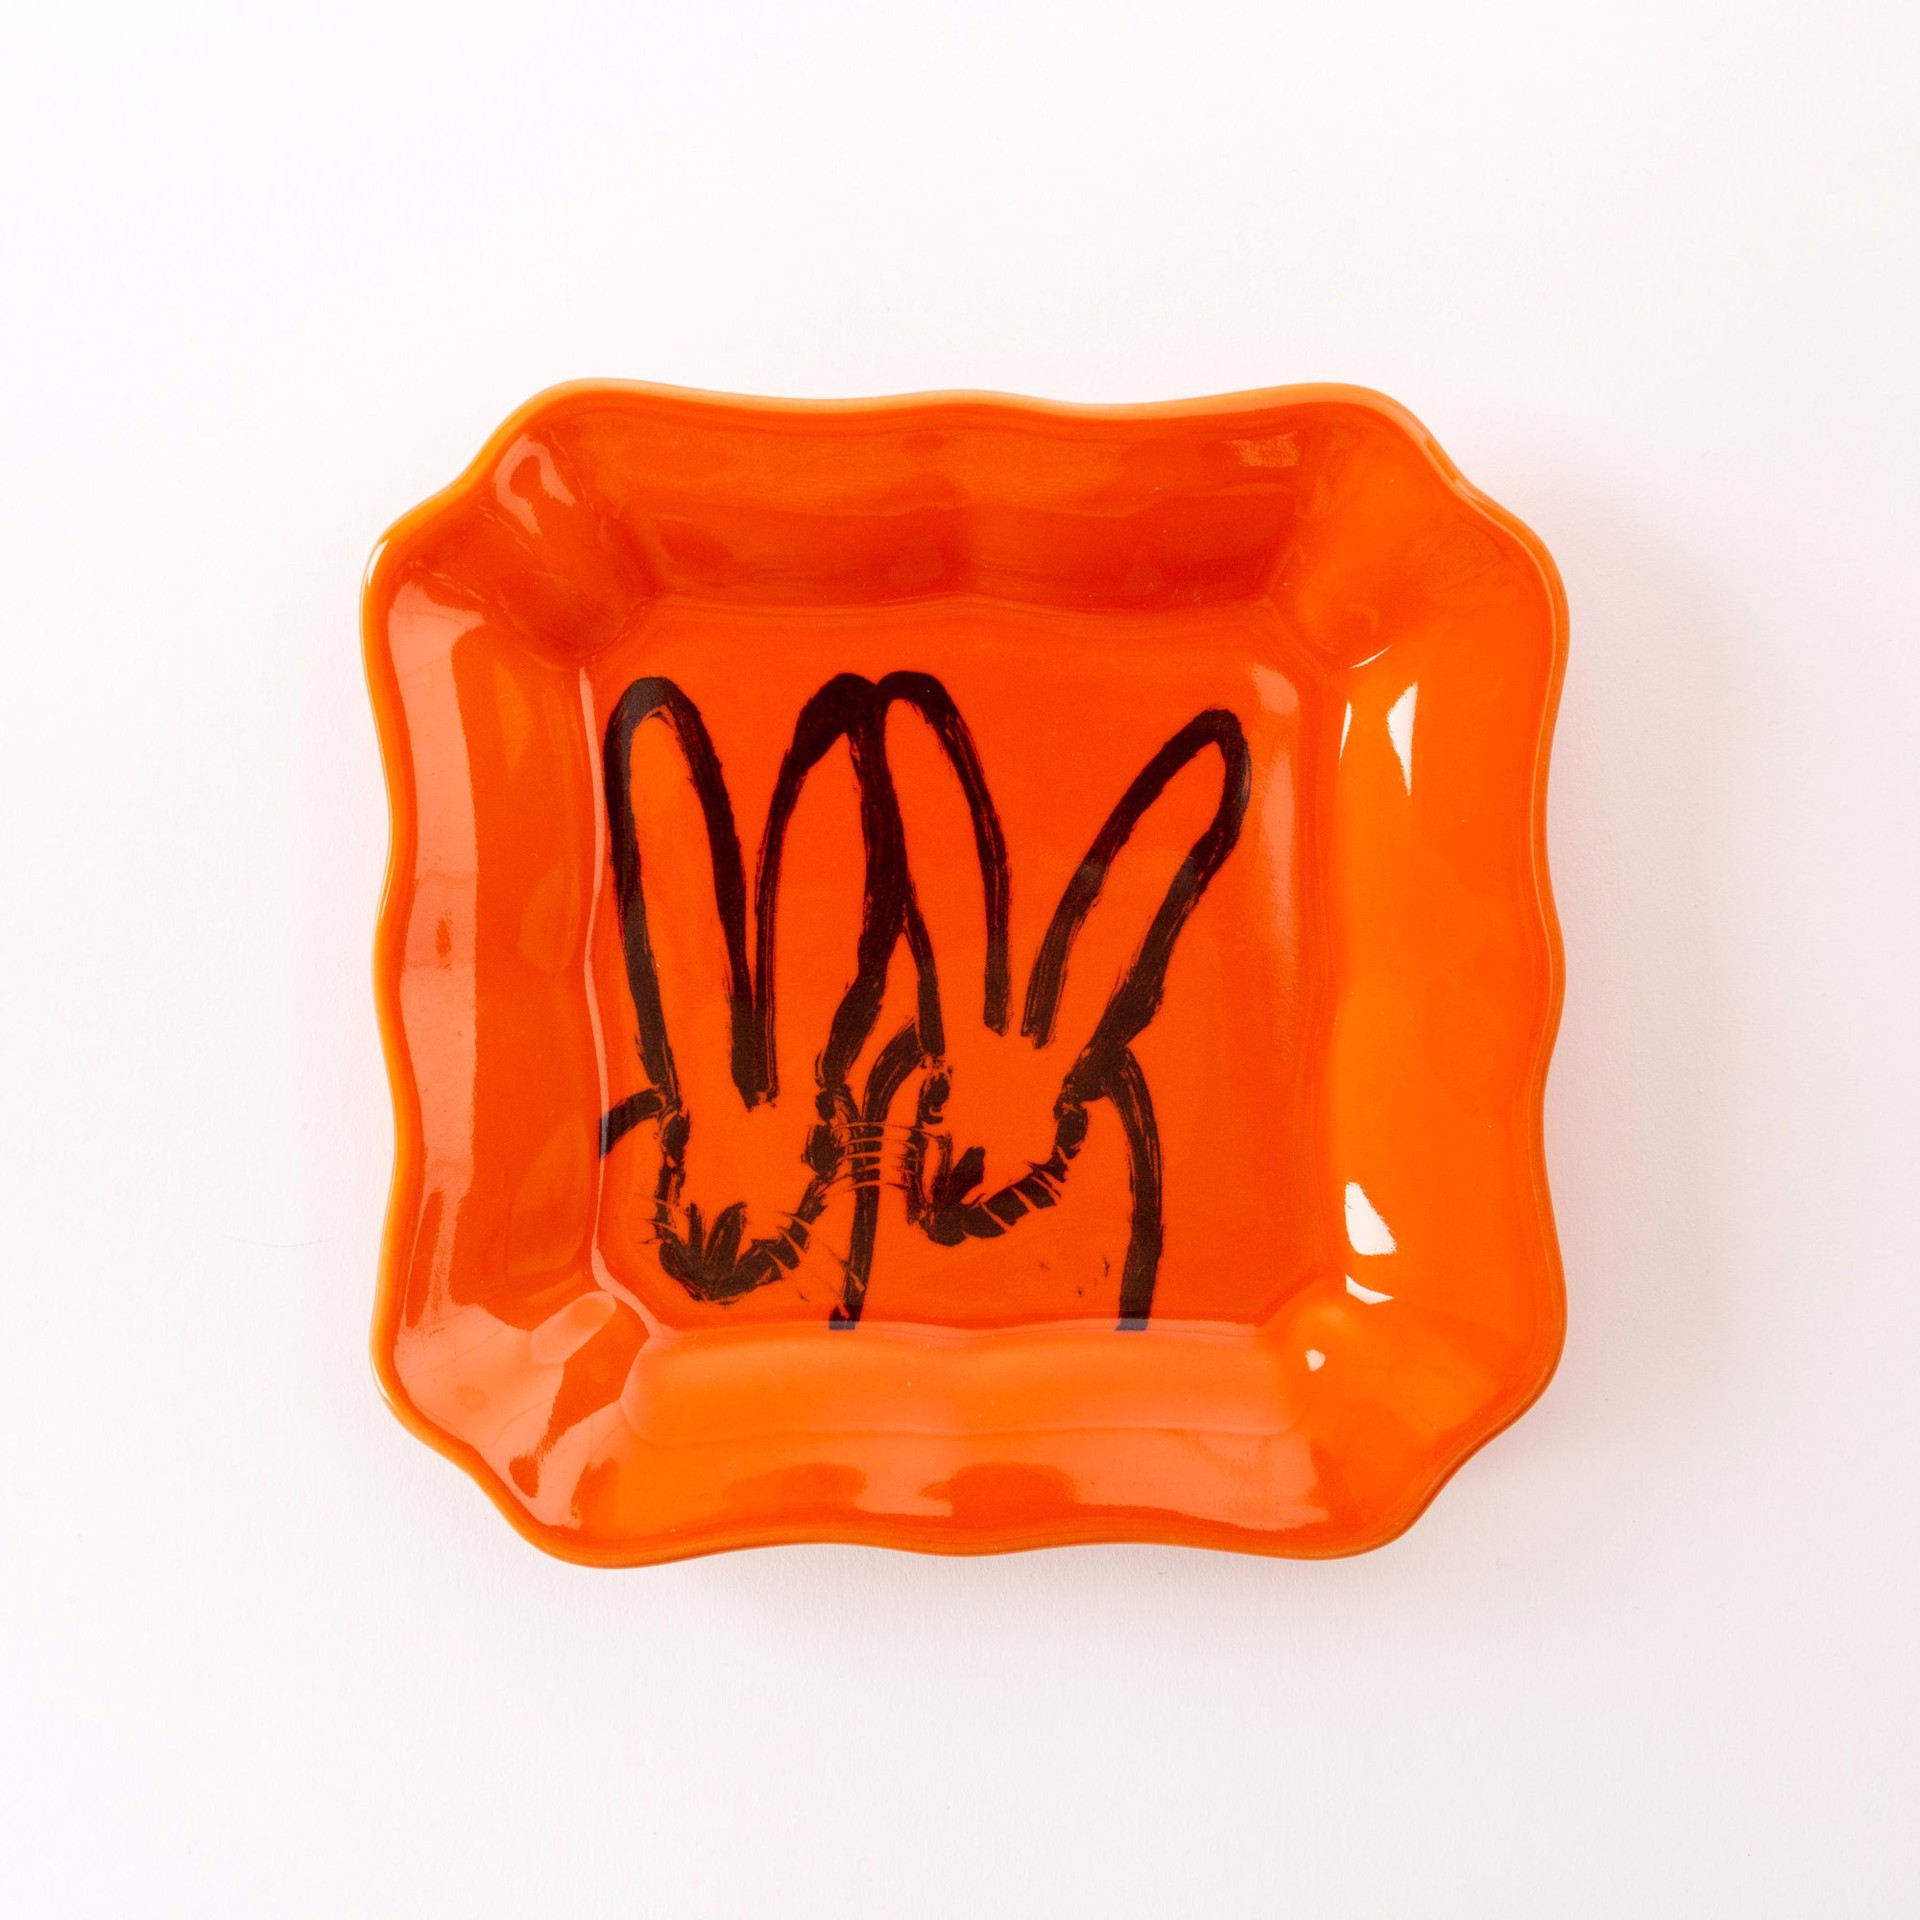 Bunny Portrait Plate - Orange by Hunt Slonem (Hop Up Shop)